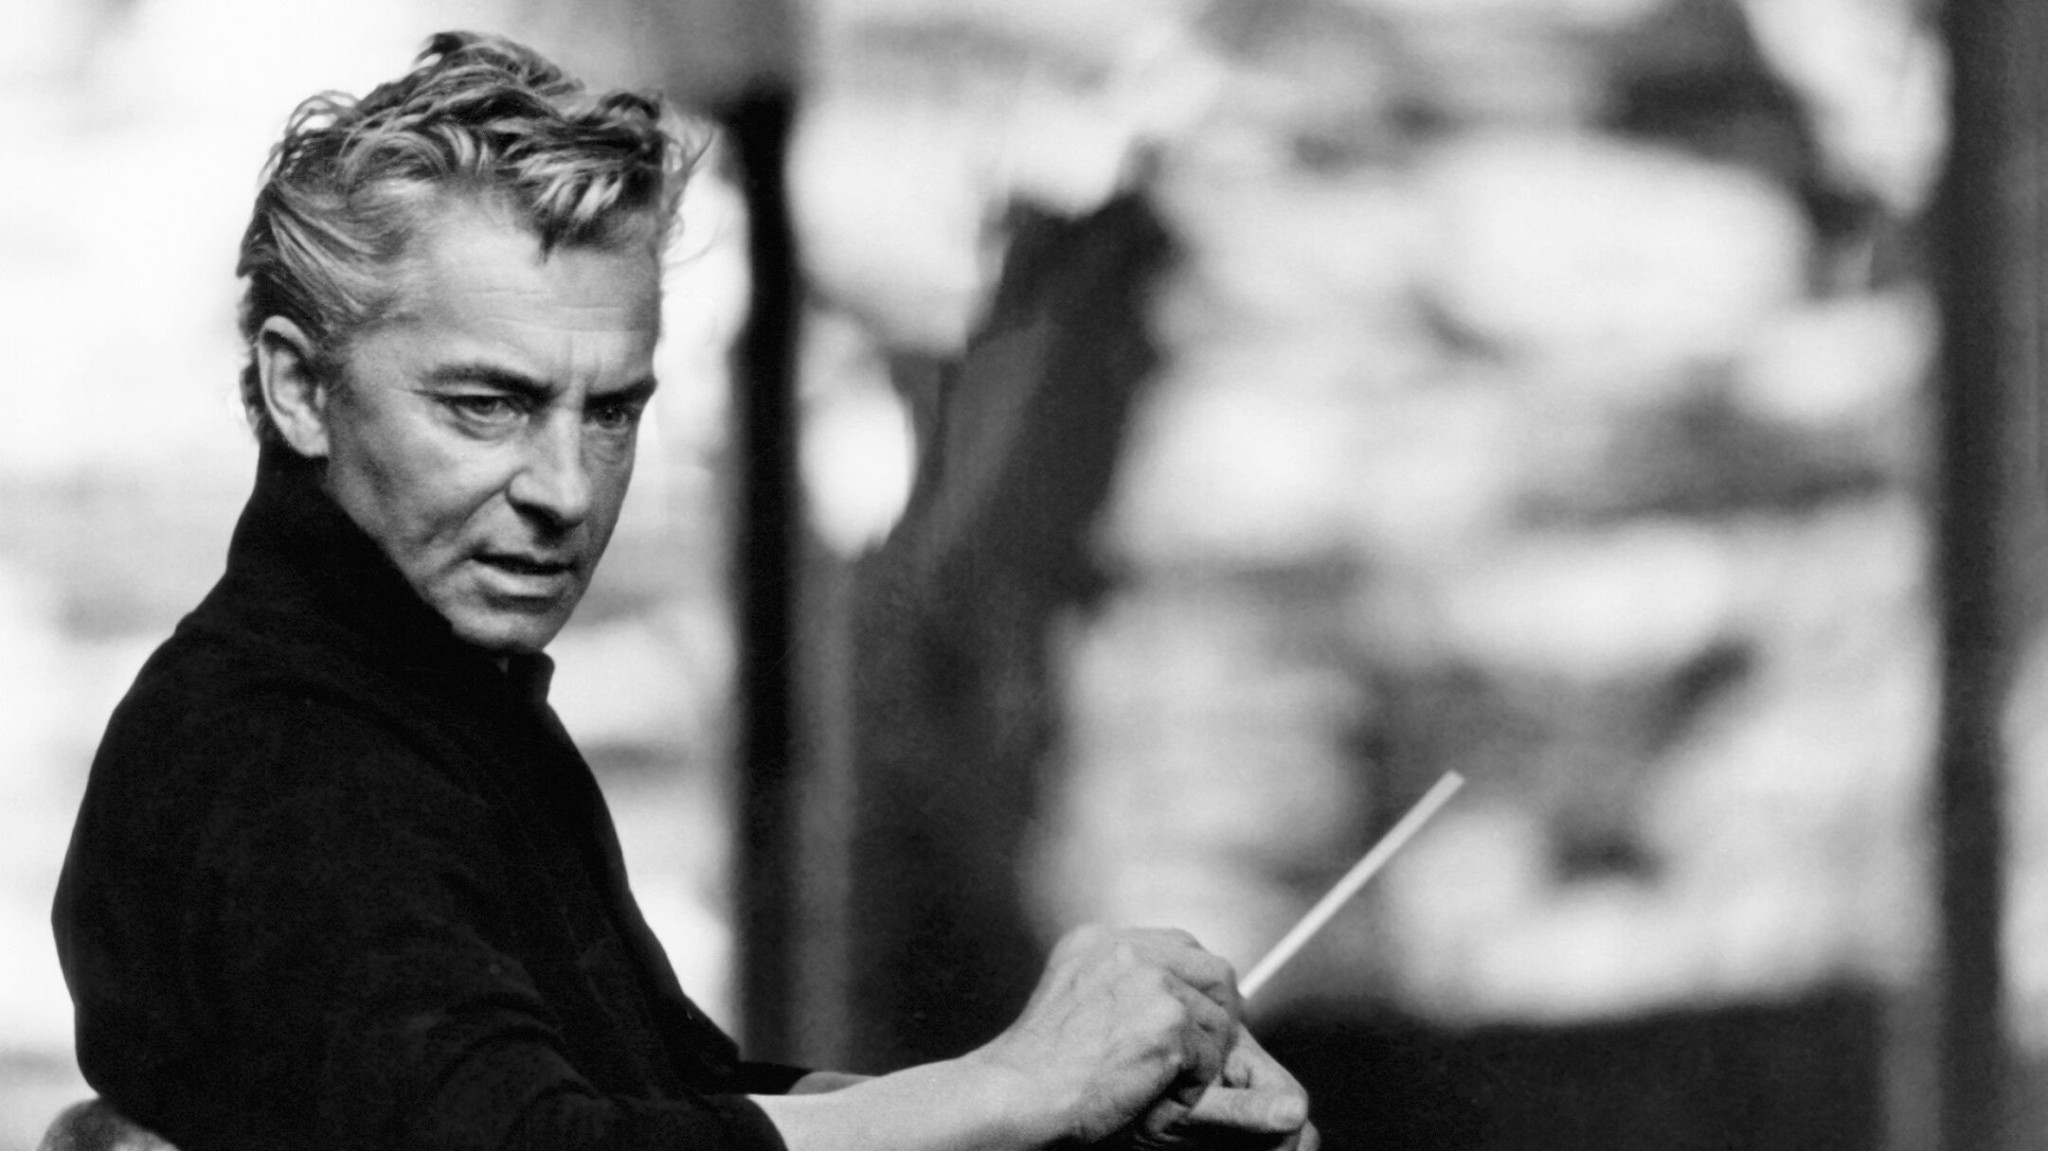 Commemorating Herbert von Karajan 32 years after his passing